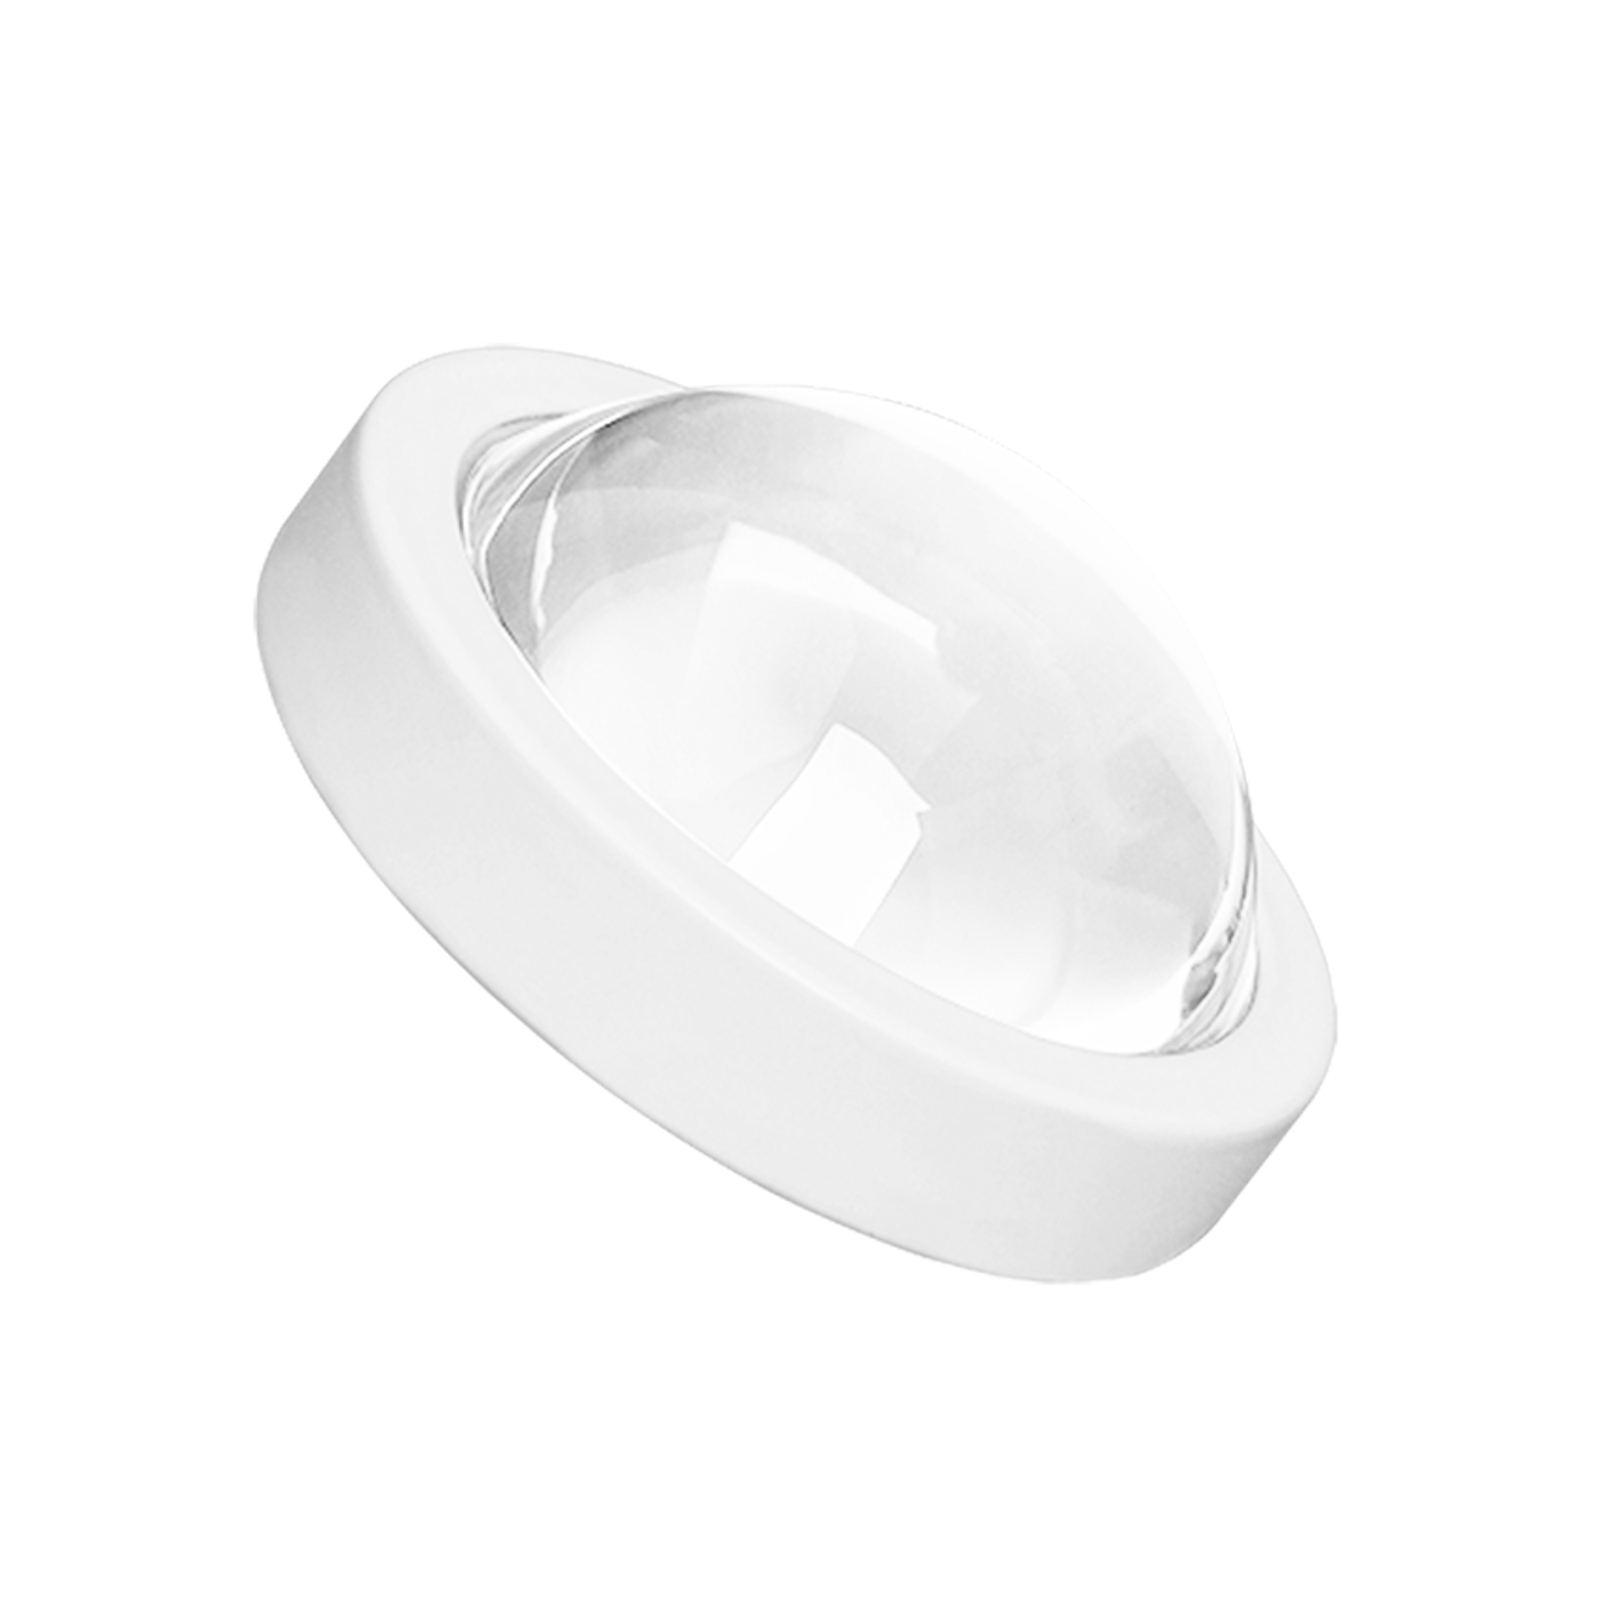 Lindby downlight Jyla, white, 4,200 K, 3-bulb, lens, GX53